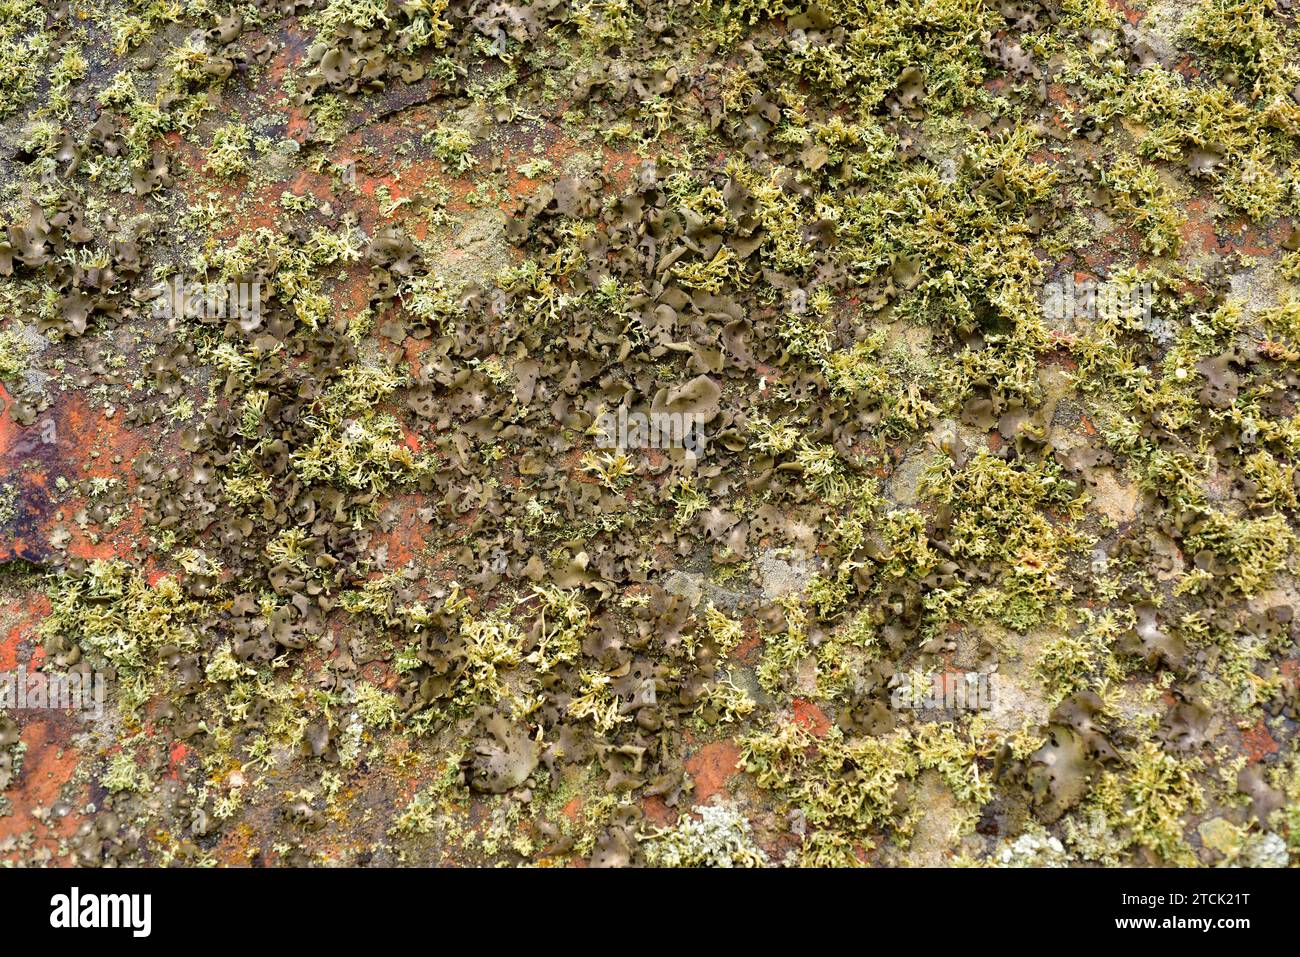 Lichen community dominated by Umbilicaria hirsuta (brown)  and Ramalina capitata (greenish- yellow). This photo was taken in Arribes del Duero Natural Stock Photo